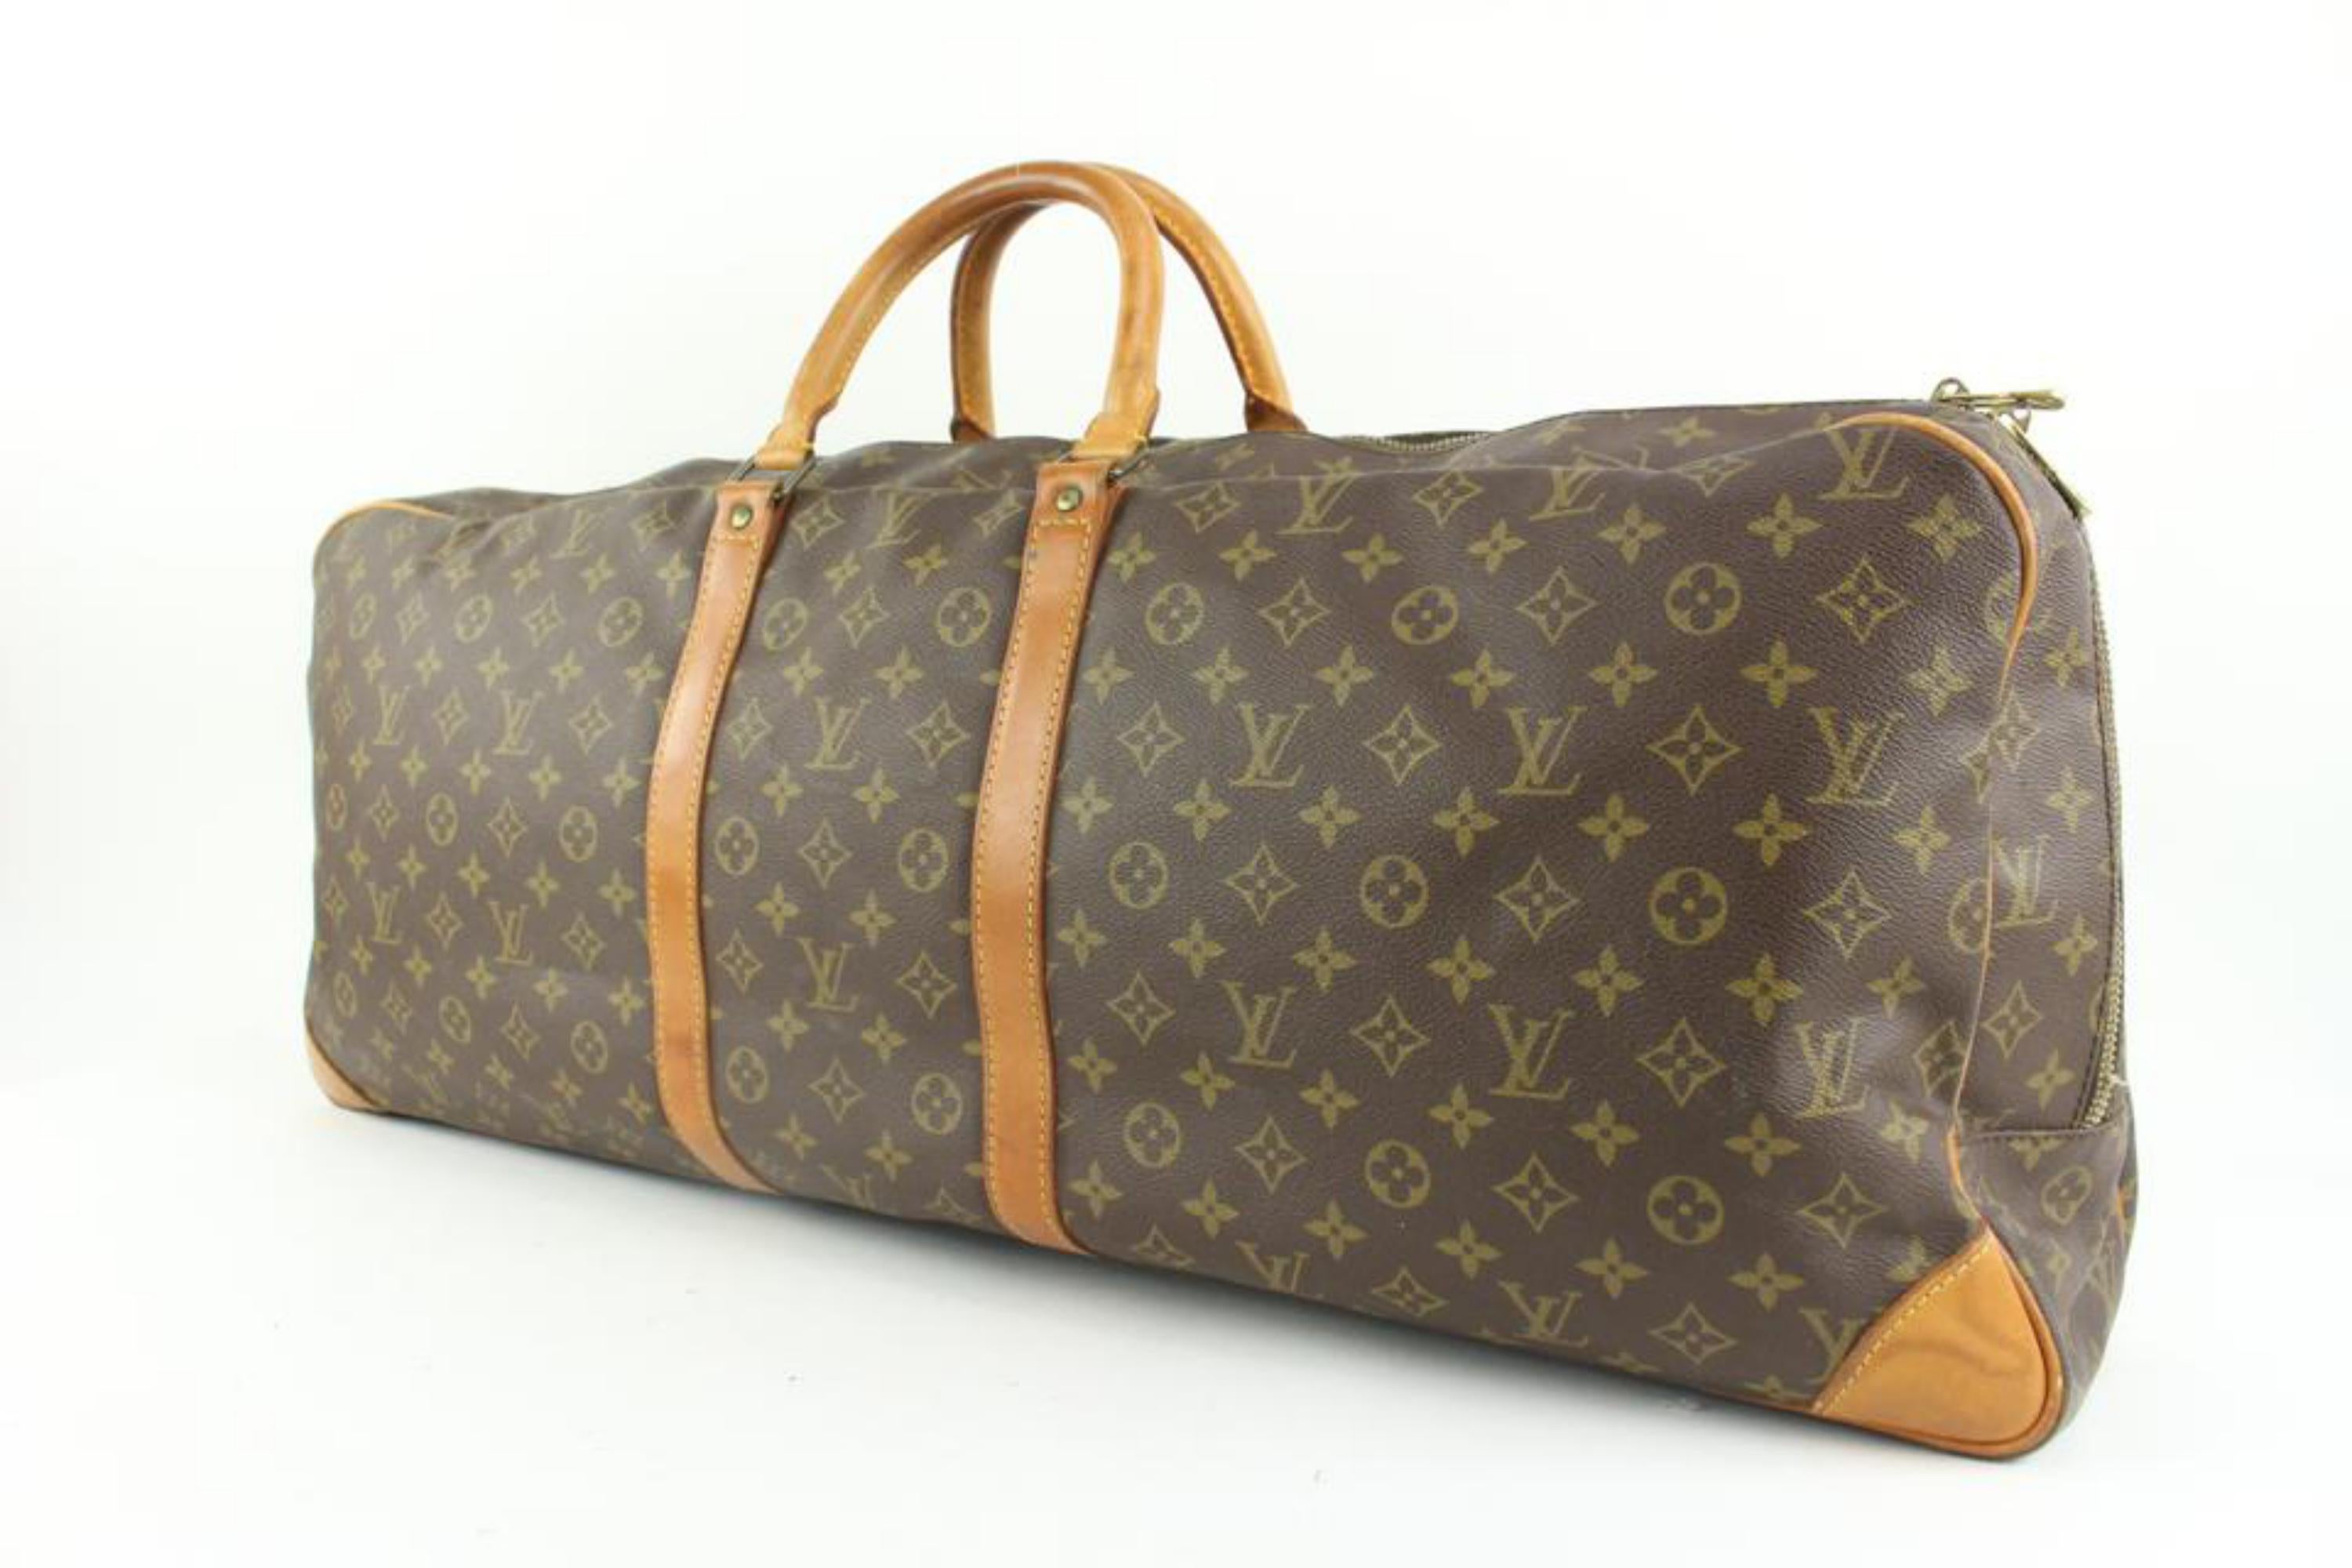 Louis Vuitton Ultra Rare Monogram Sac Plein Air Long Sports Bag 110lv56
Date Code/Serial Number: 852
Made In: France
Measurements: Length:  28.5